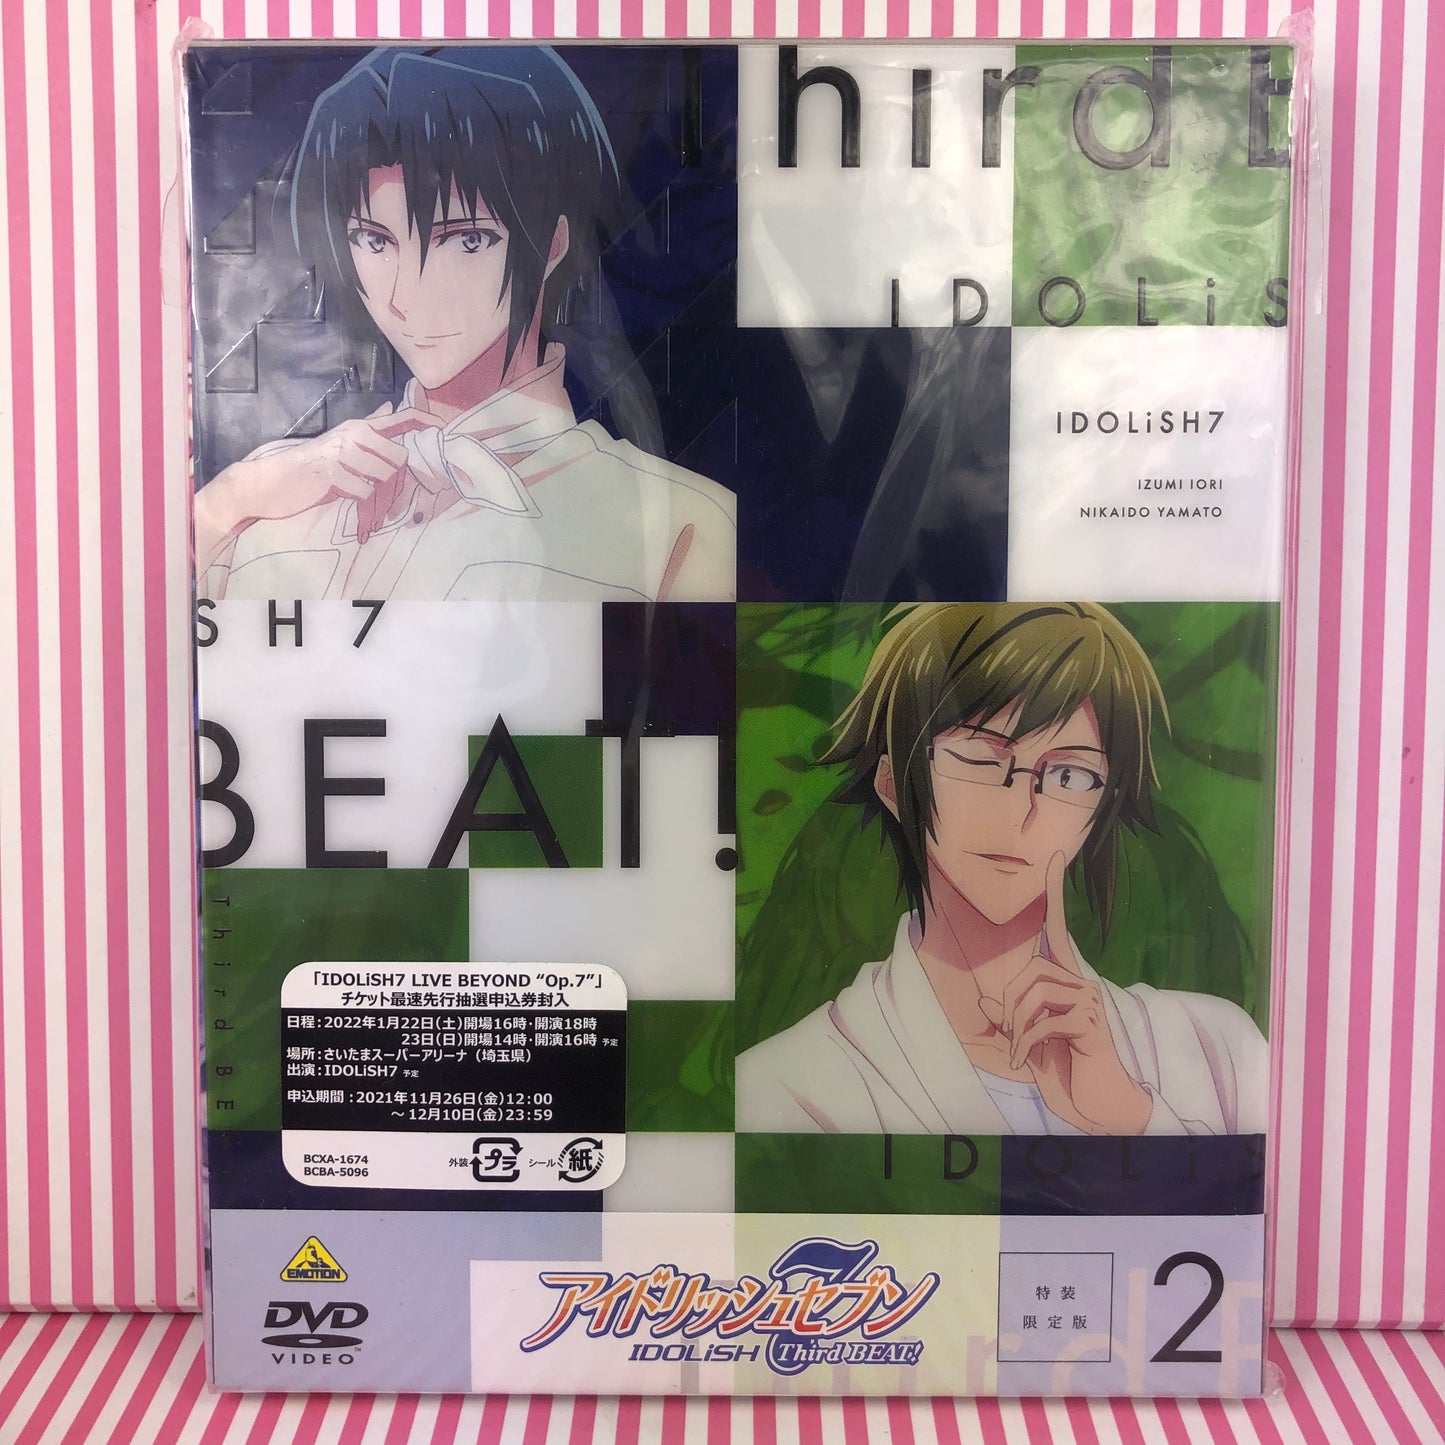 Bandai Namco Arts Blu-ray/Otome Game Idolish7 Third BEAT! Special Limited Edition 2